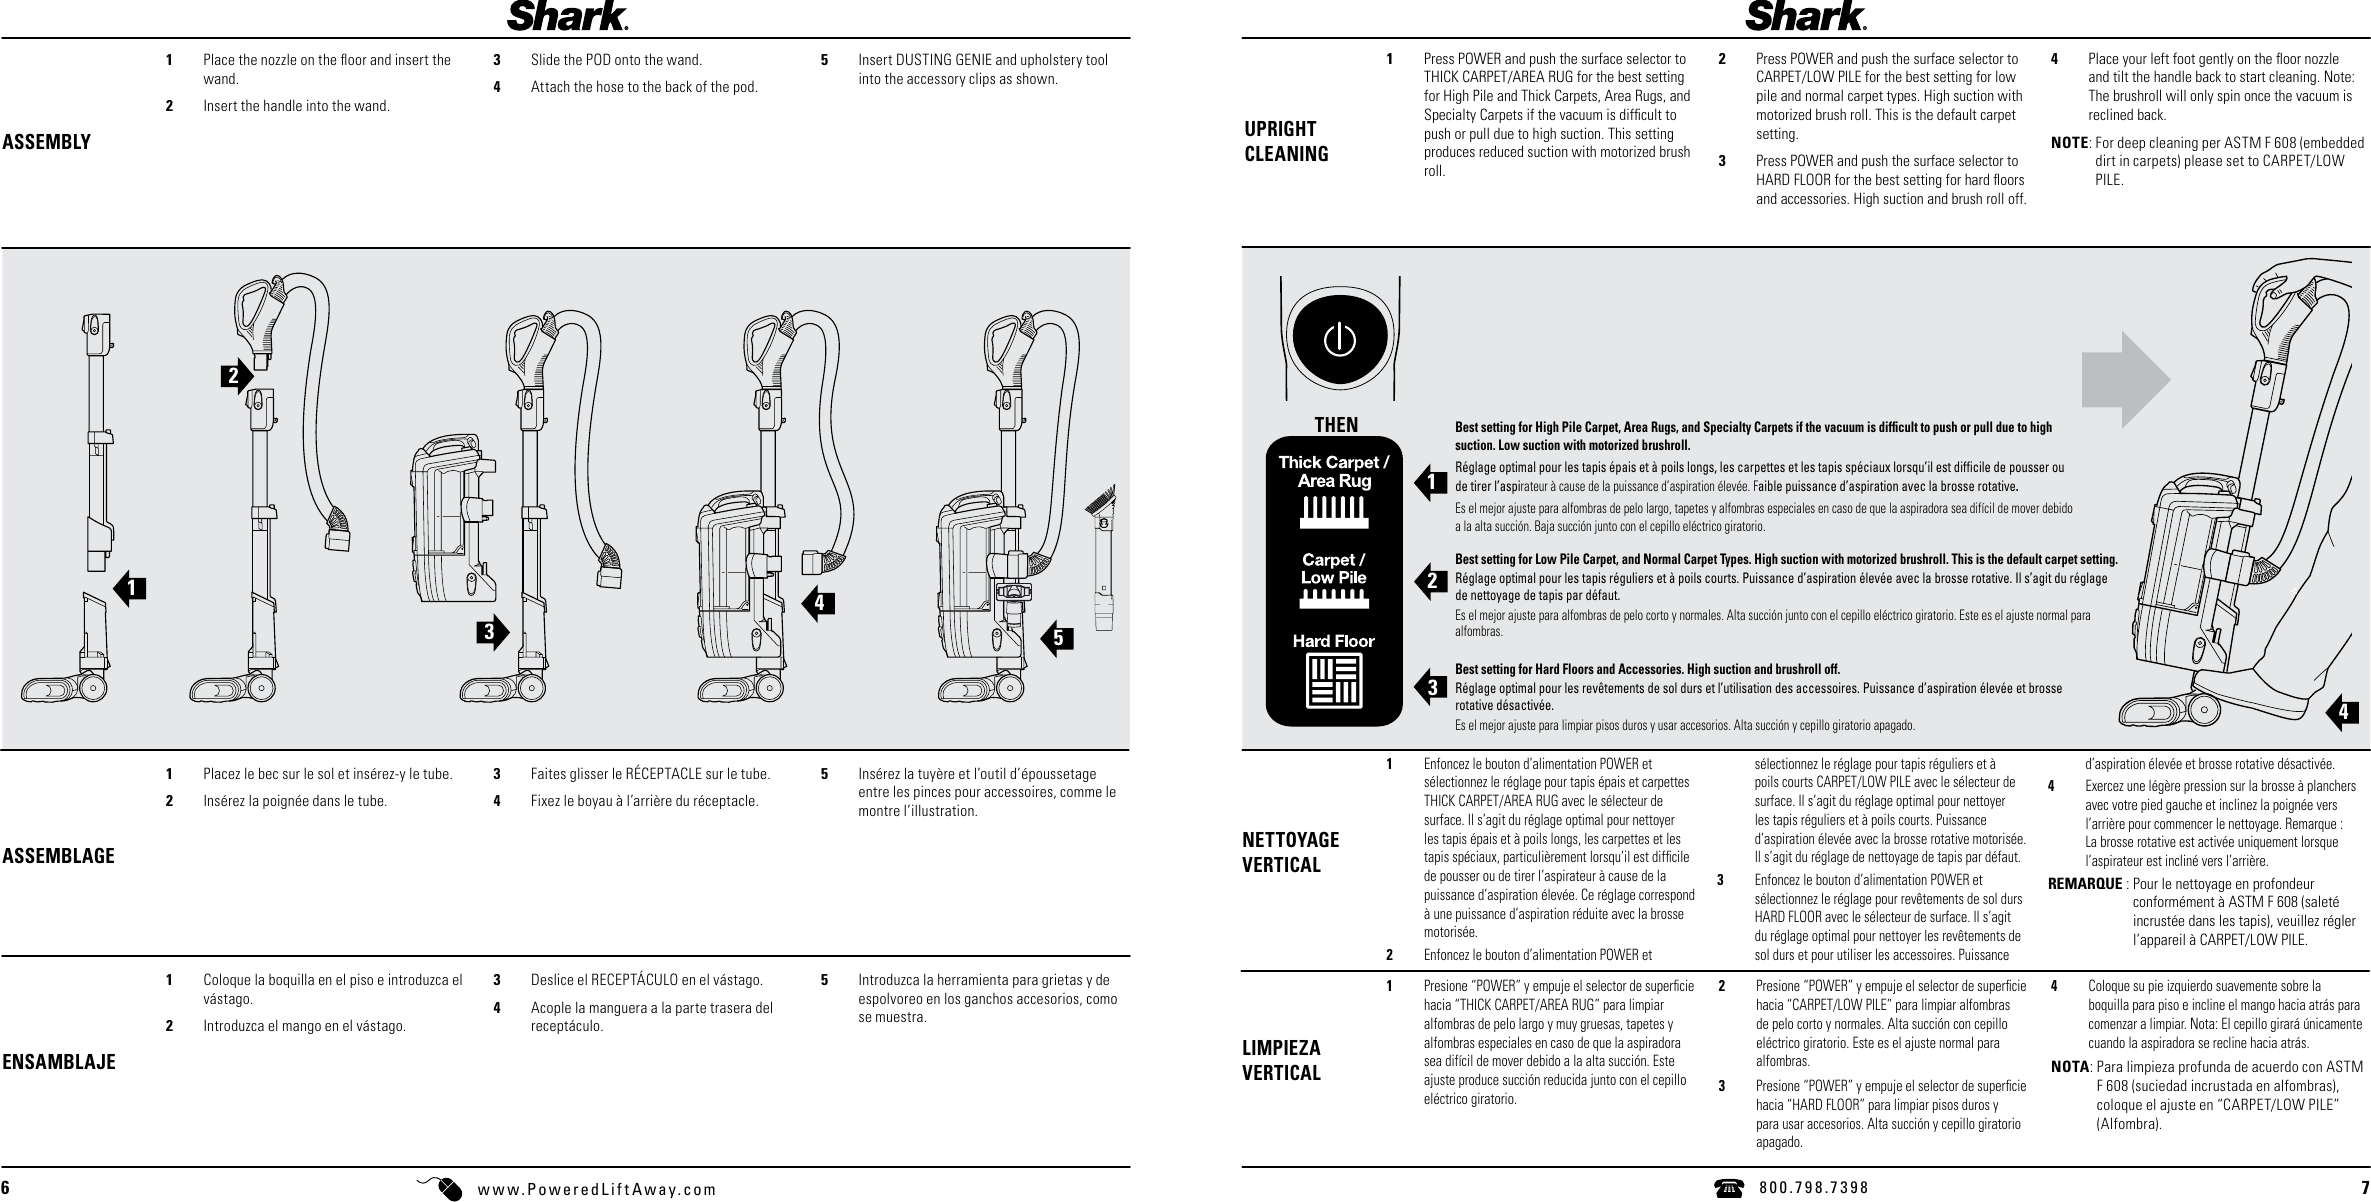 Page 4 of 11 - Shark Shark-Shark-Rotator-Powered-Lift-Away-Upright-Vacuum-Nv652-Owners-Guide-  Shark-shark-rotator-powered-lift-away-upright-vacuum-nv652-owners-guide